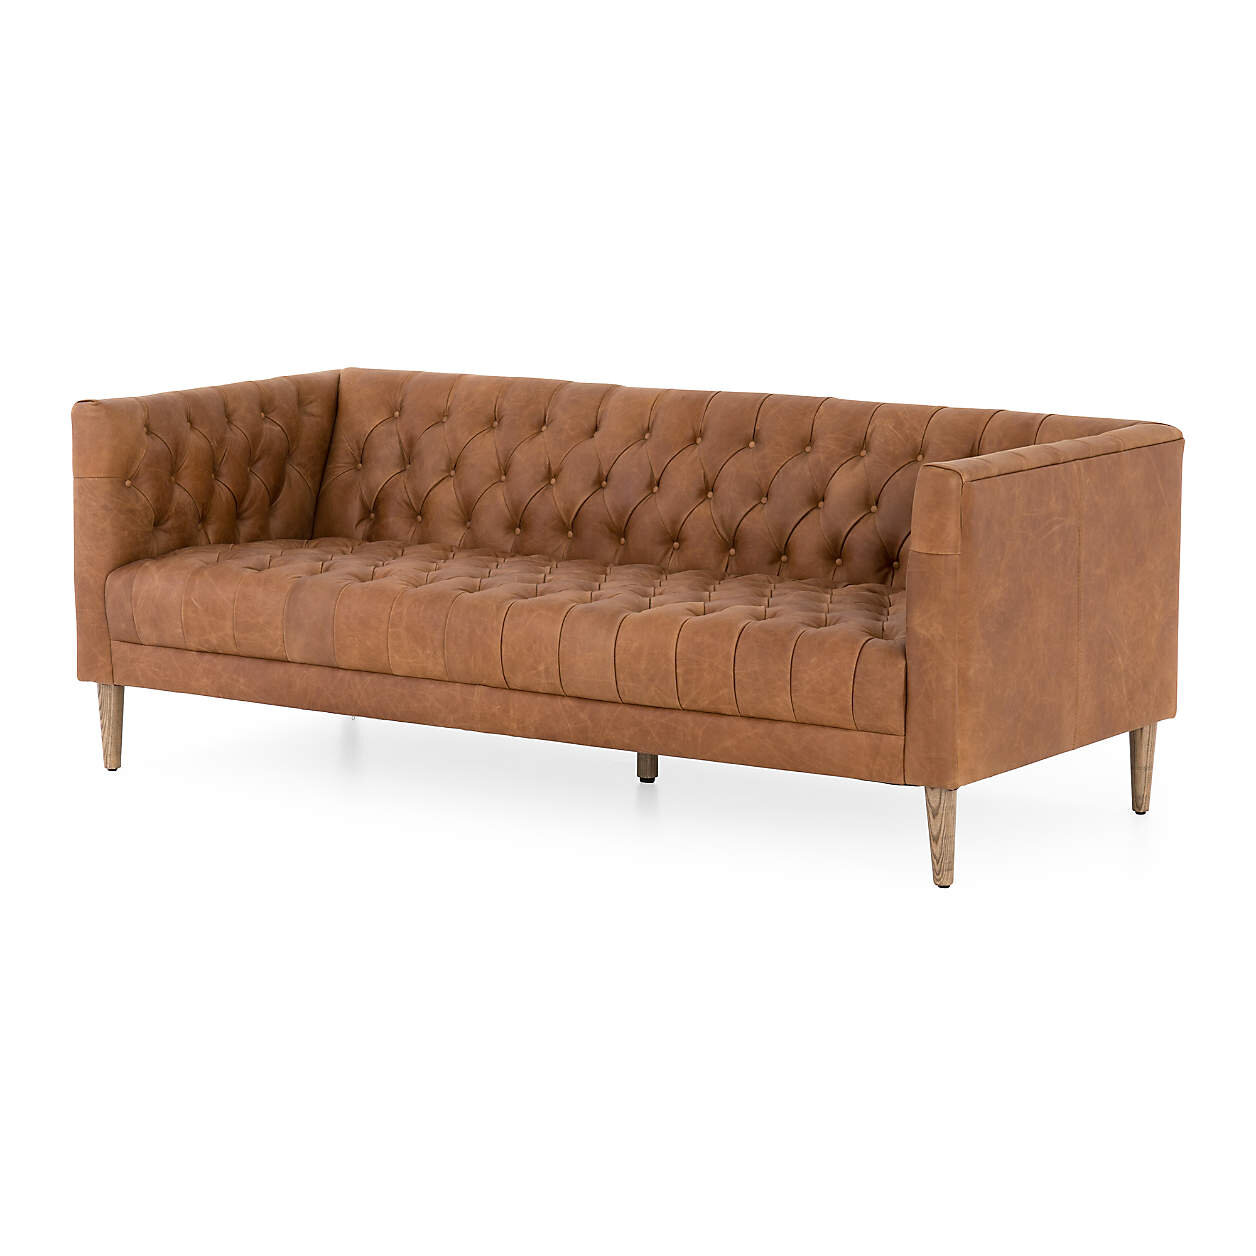 Rollins Chocolate Leather Sofa